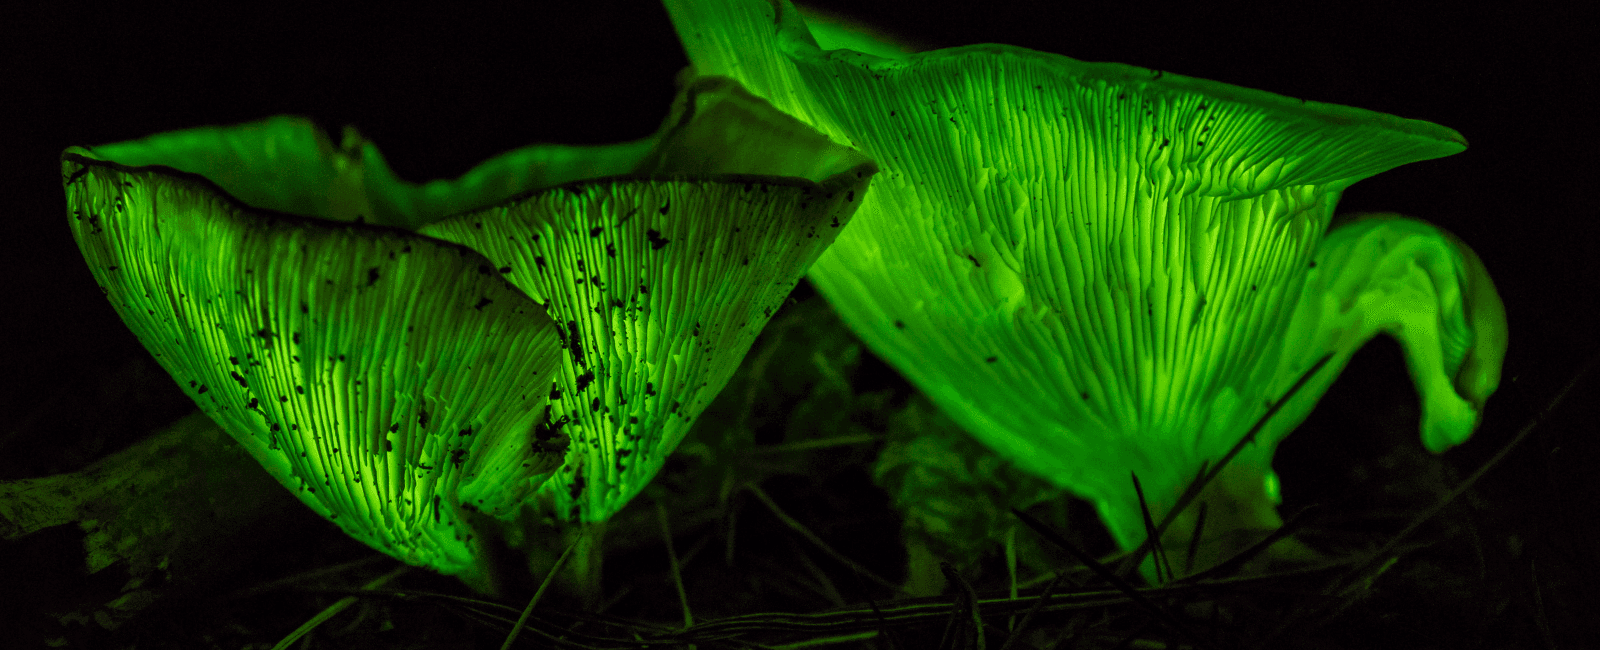 These Bioluminescent Mushrooms Glow in the Dark